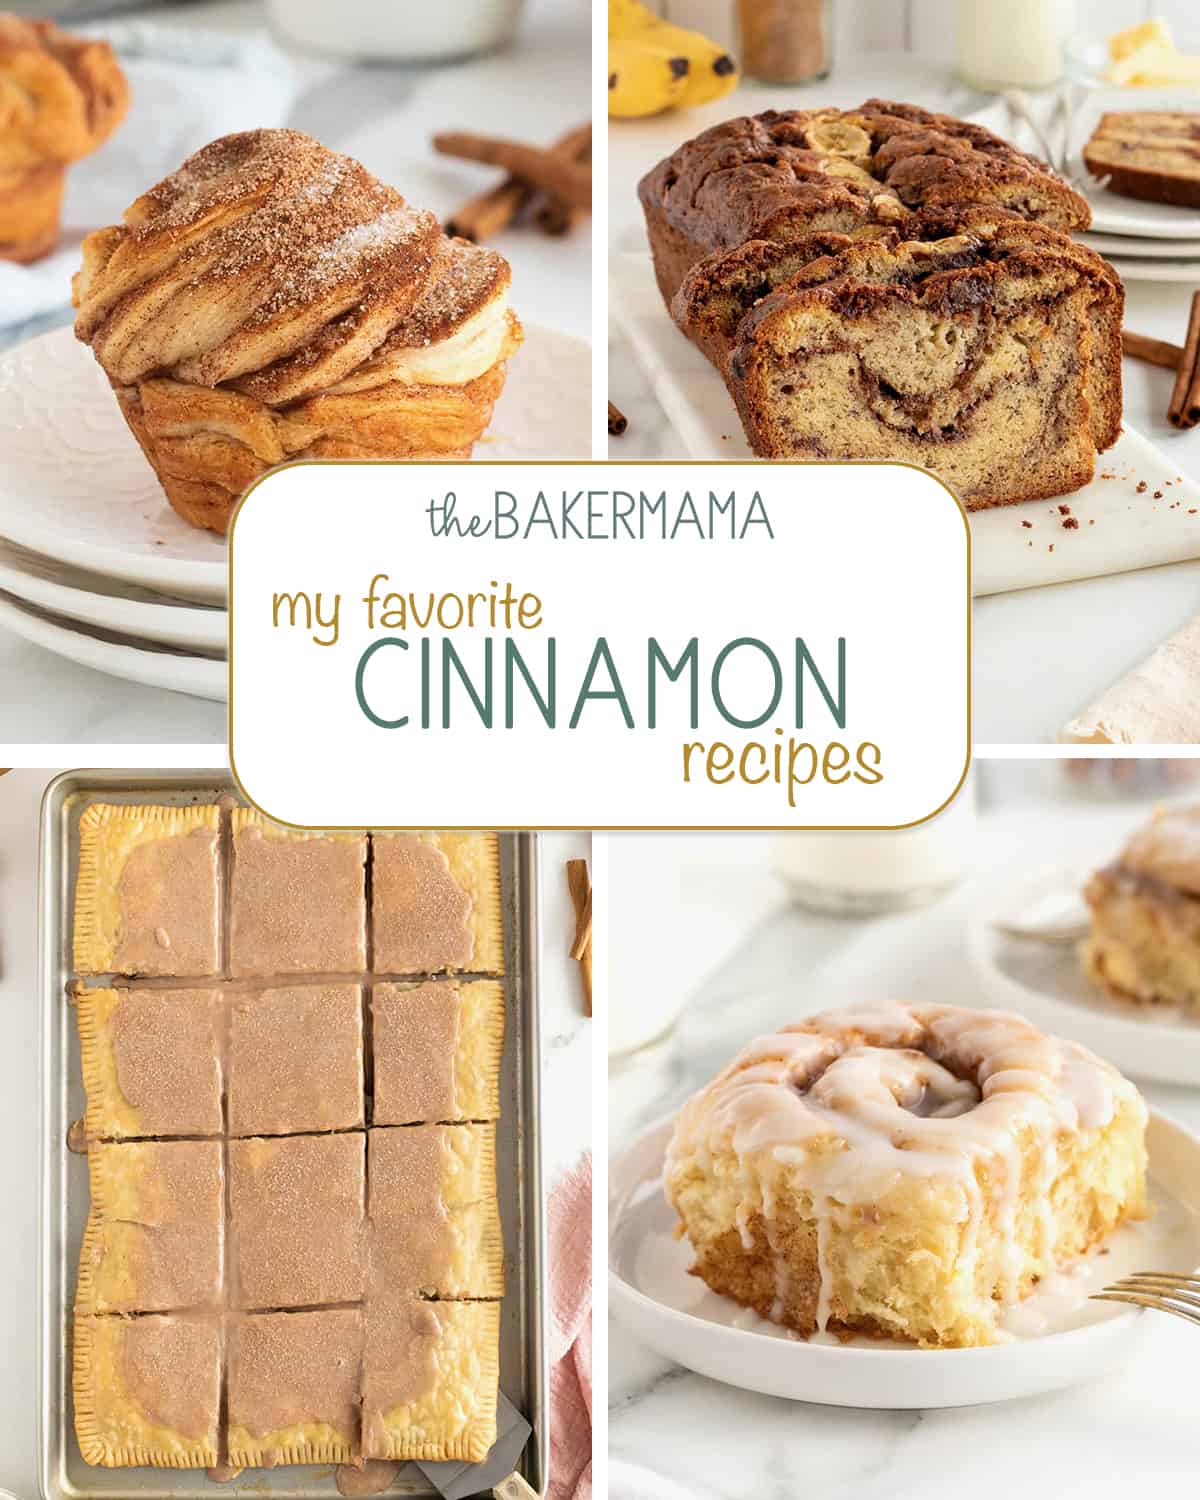 Cinnamon Sugar Cruffin, Cinnamon Swirled Banana Bread, Cinnamon Brown Sugar Sheet Pan Pop Tart, Classic Homemade Cinnamon Roll.